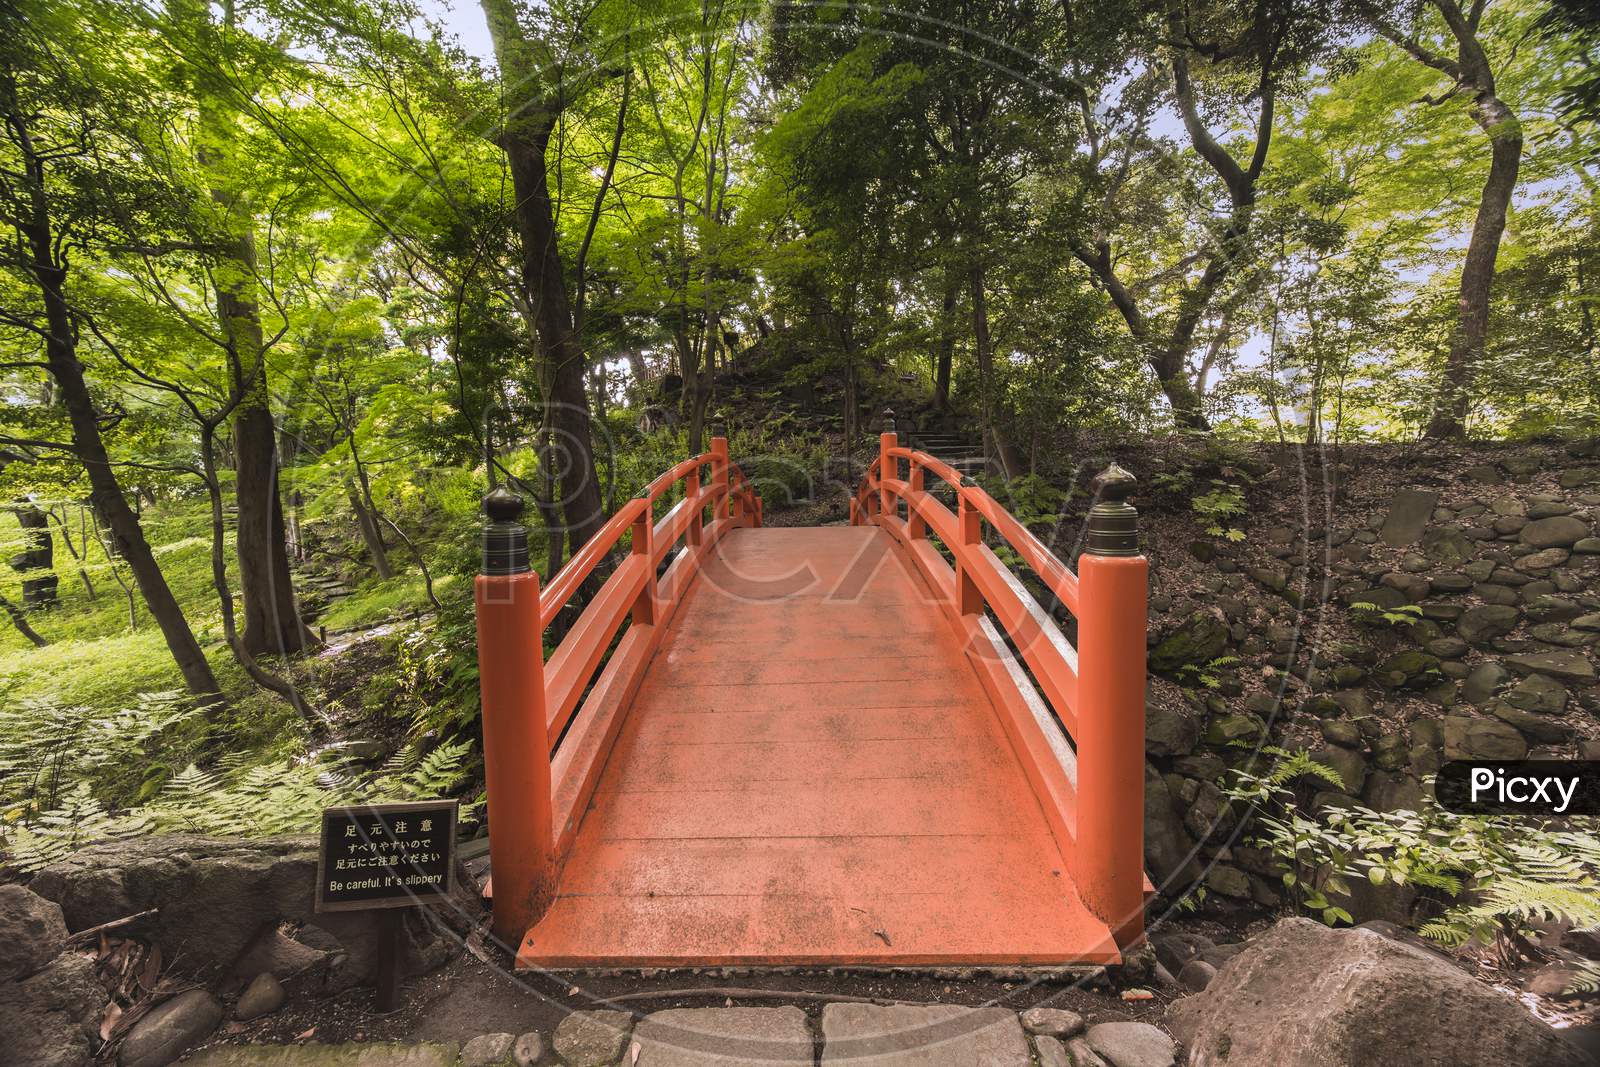 Japanese Vermilion Tsuten Bridge Surrounded By Maples And Cherry Trees In The Forest Of Koishikawa Korakuen Park.